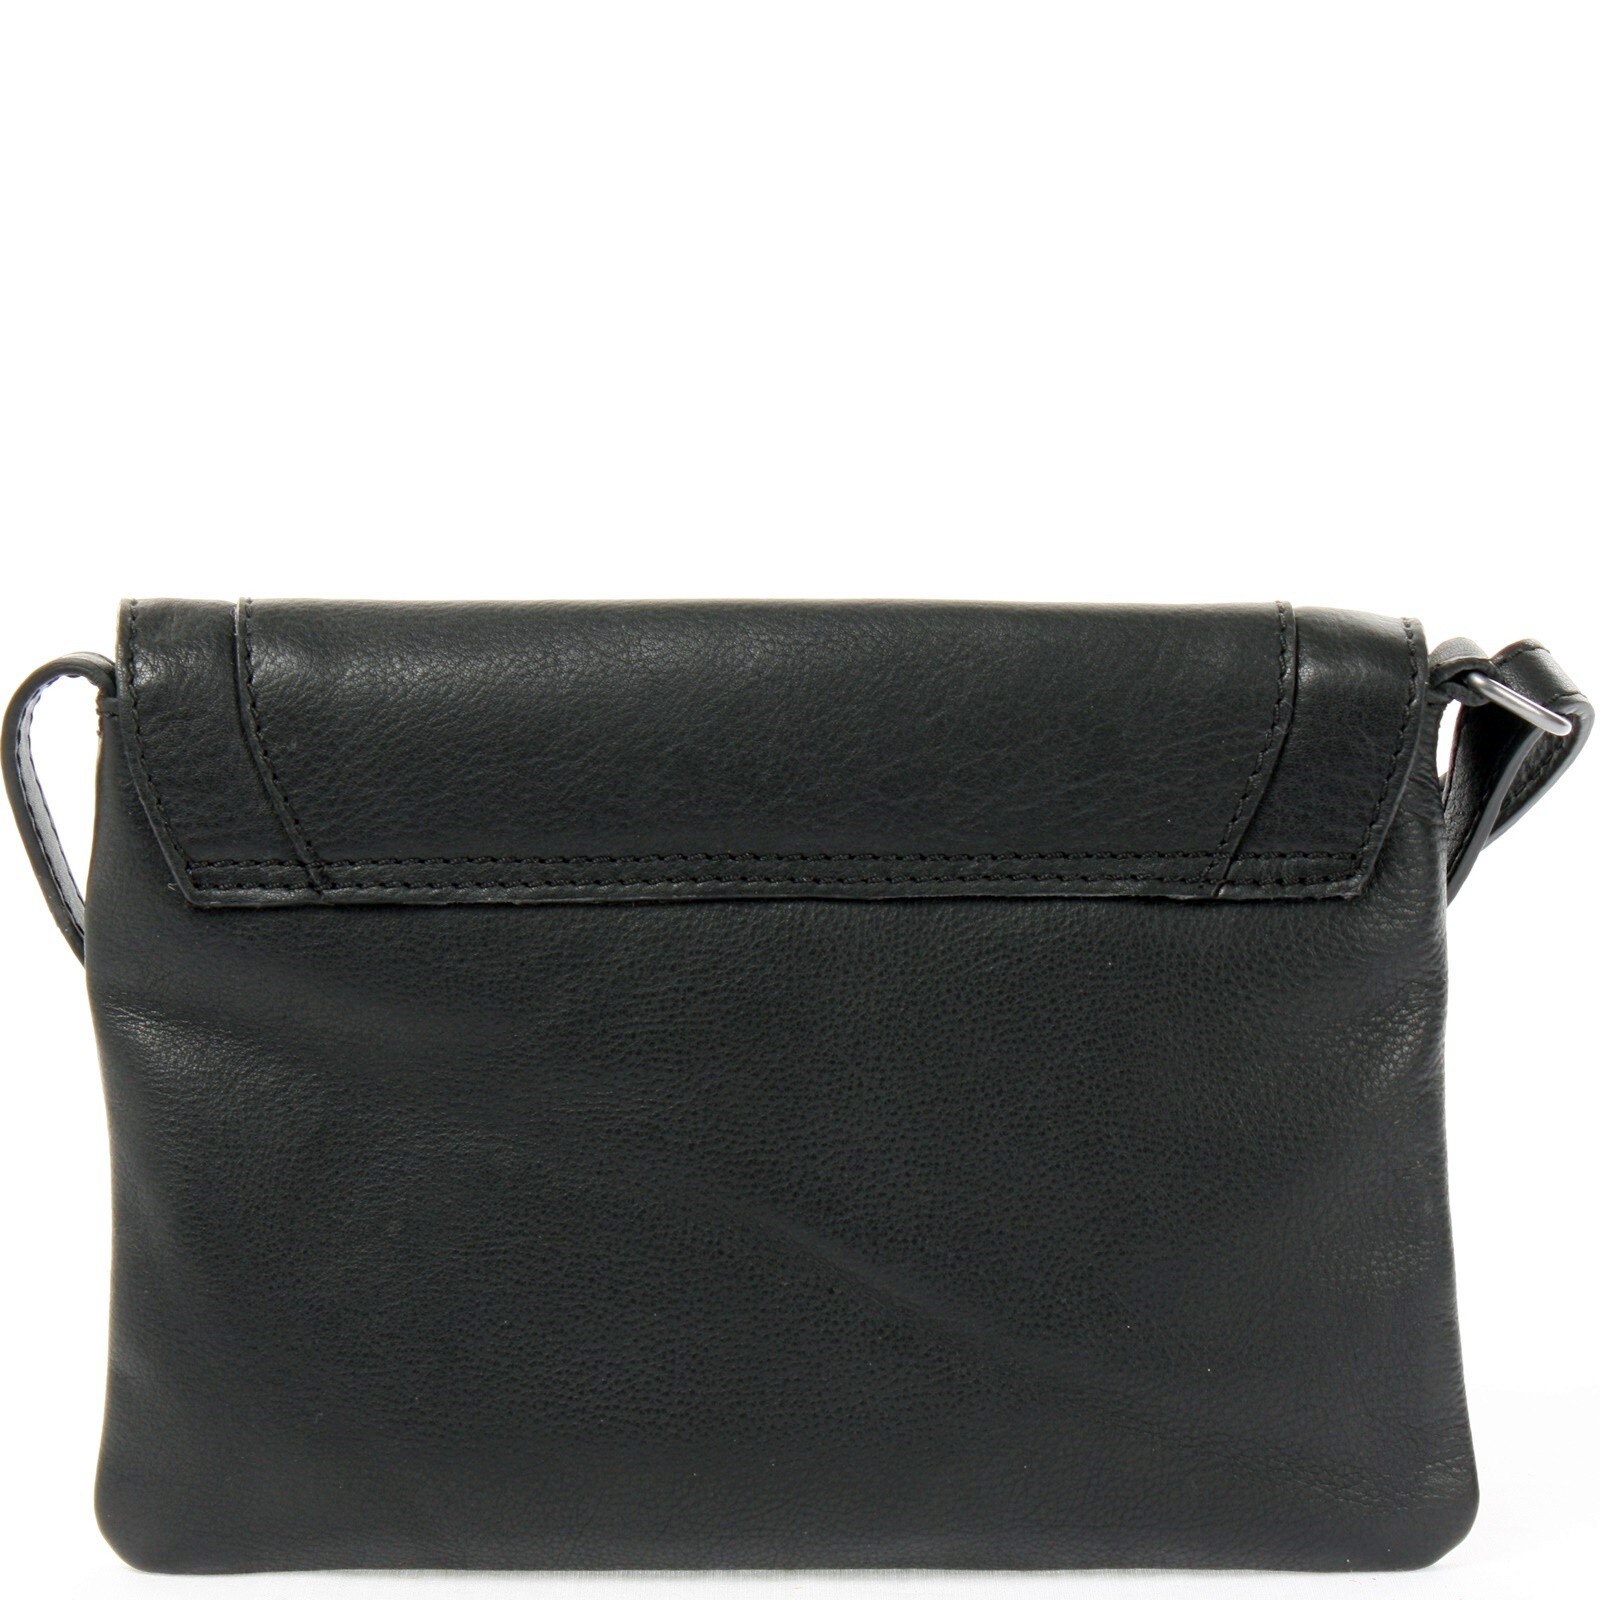 LECONI small shoulder bag leather bag clutch women's bag | Etsy